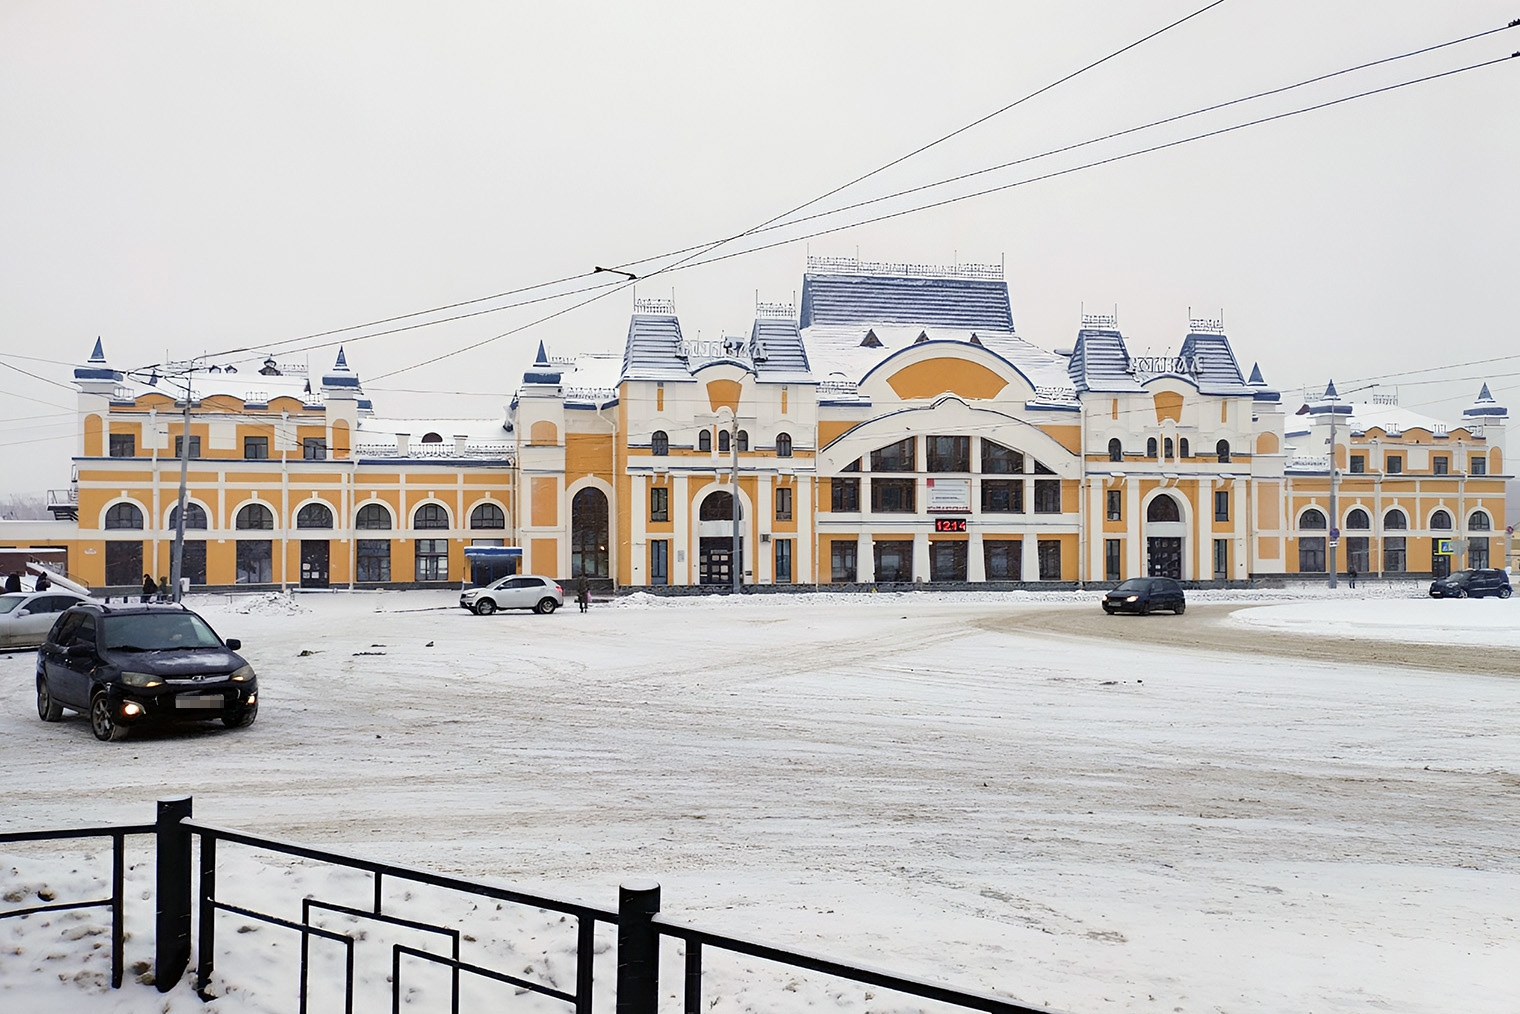 Вокзал Томск⁠-⁠1 — вполне приятное место как снаружи, так и внутри